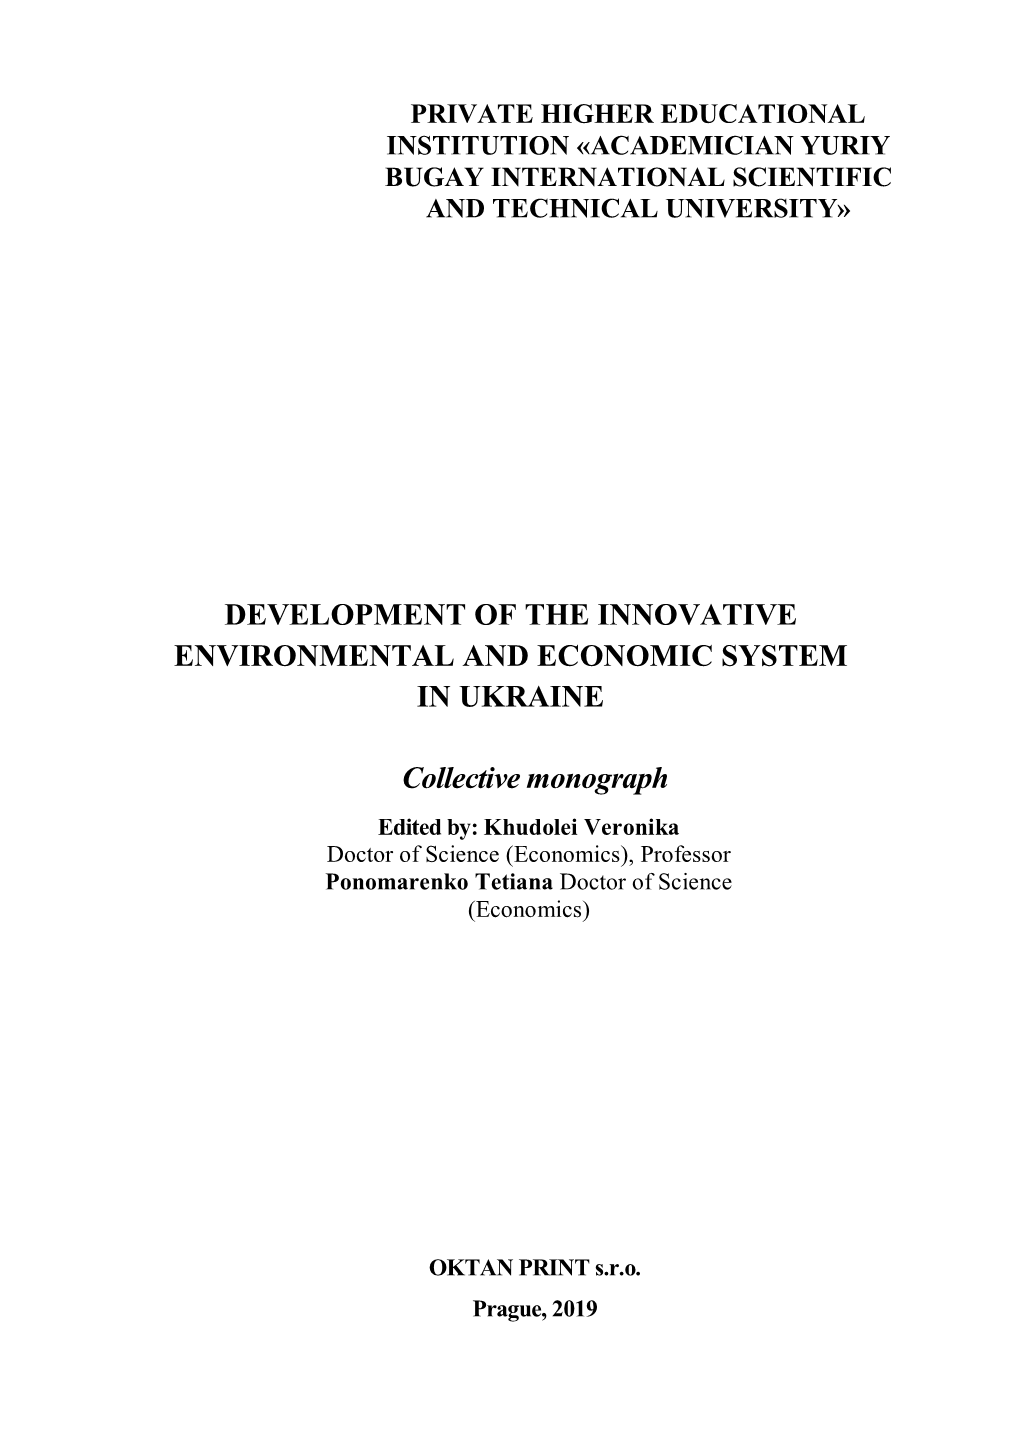 Development of the Innovative Environmental and Economic System in Ukraine